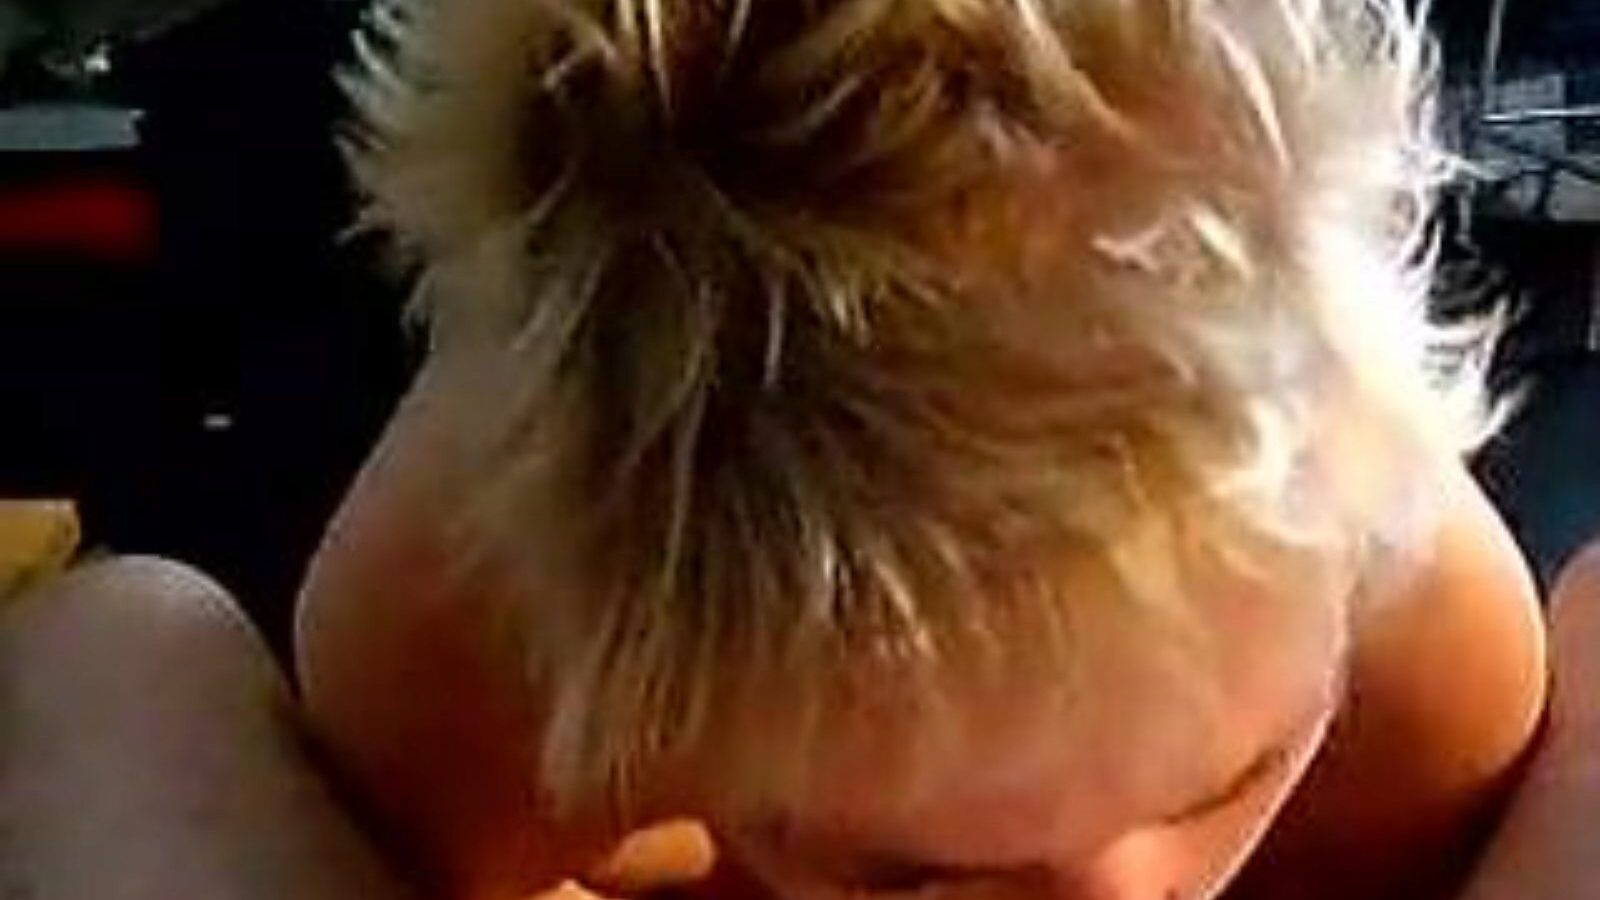 leuke dame: homemade & old girl porn video a6 - xhamster bekijk gratis leuke dame tube fuckfest movie op xhamster, met de heetste verzameling nederlandse zelfgemaakte, old girl & sucking pornography clip-optredens